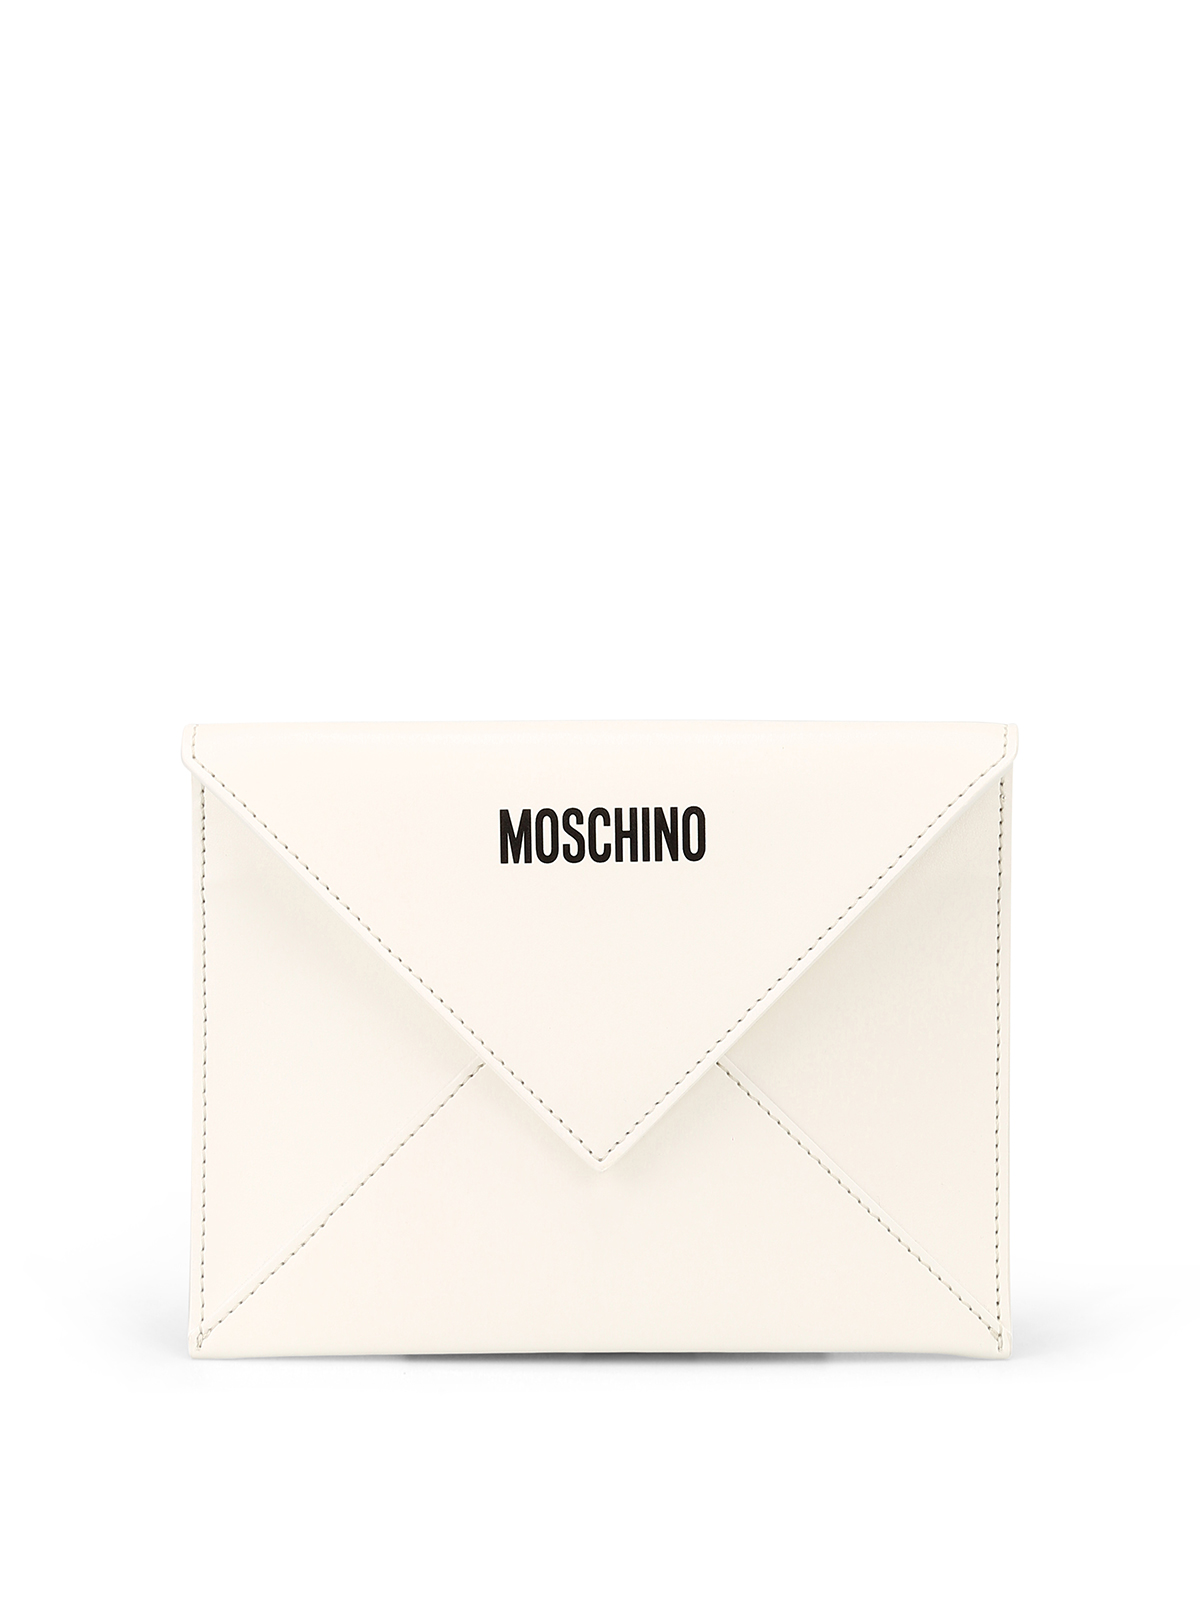 Moschino - Be Mine leather clutch 